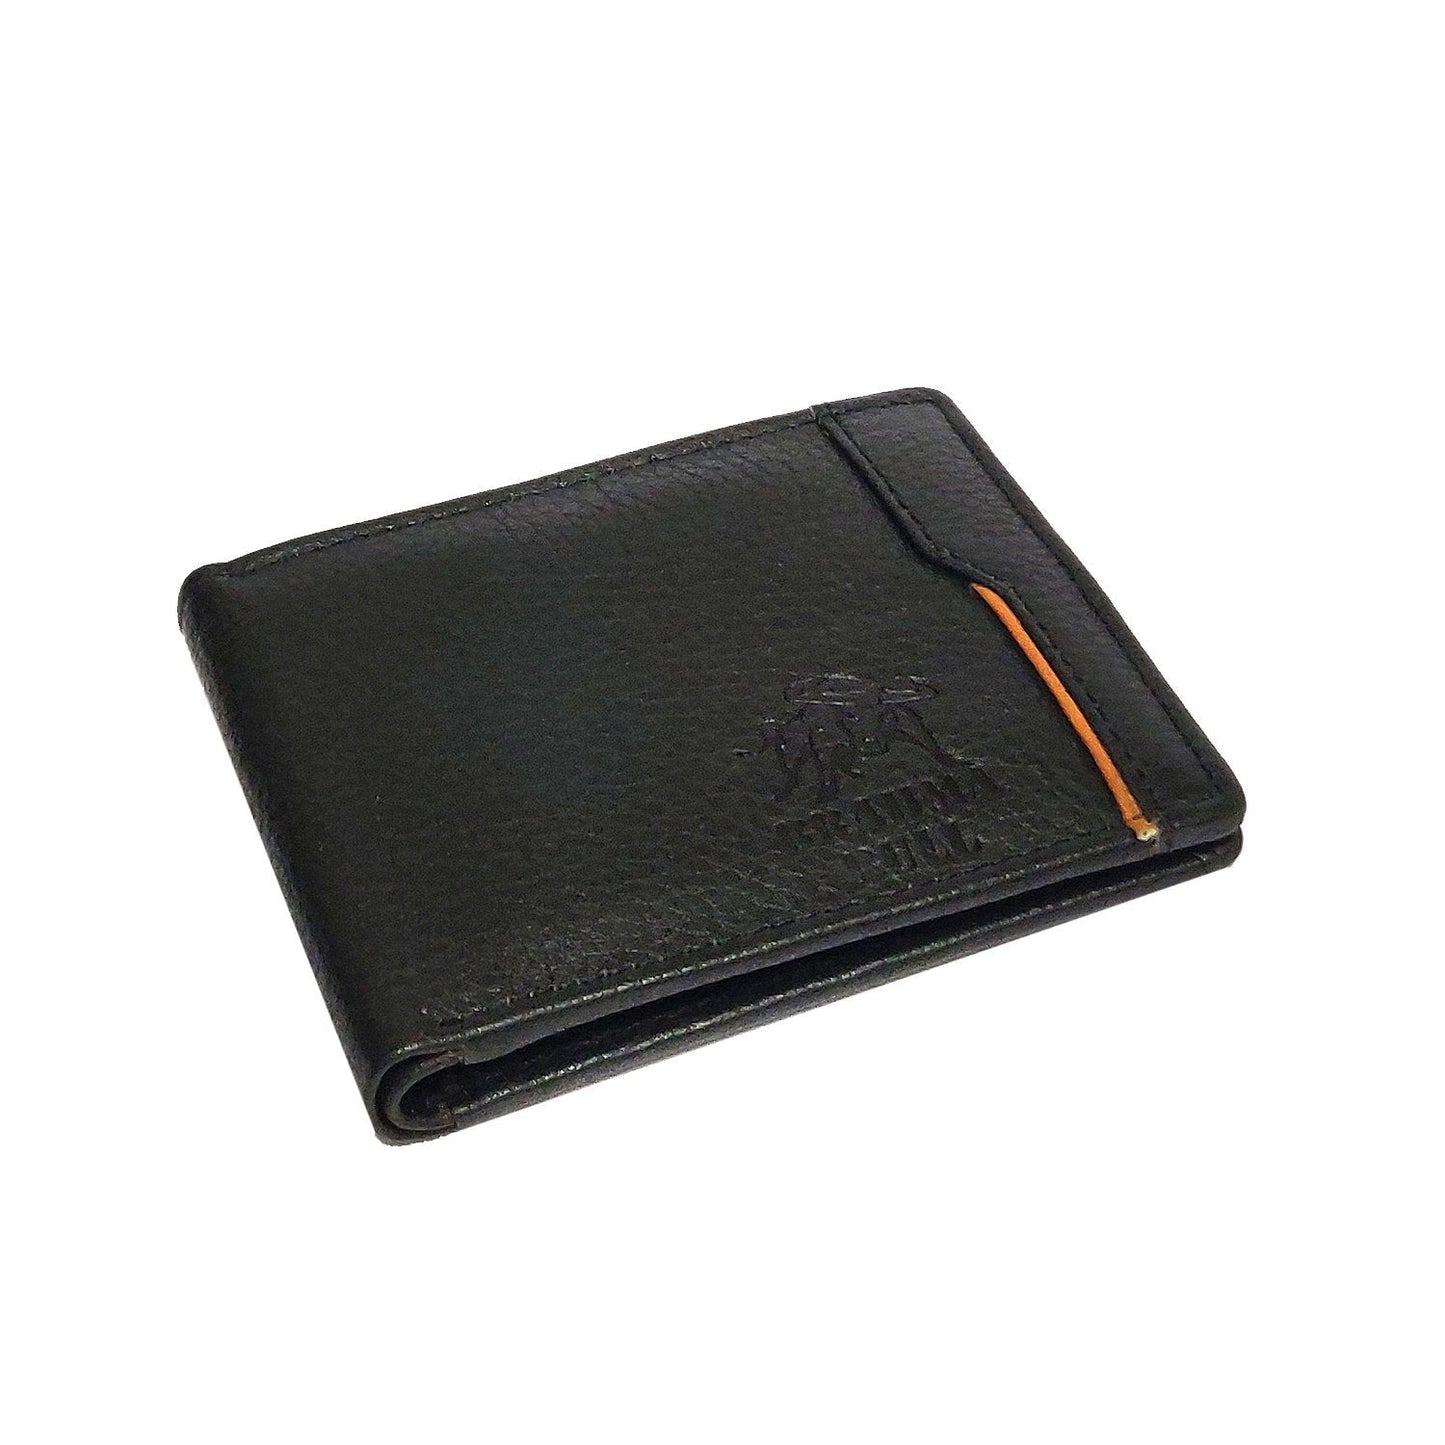 Brahma Bull Ignacio Edition - Black Leather Wallet - Brahma Bull - Men's Grooming